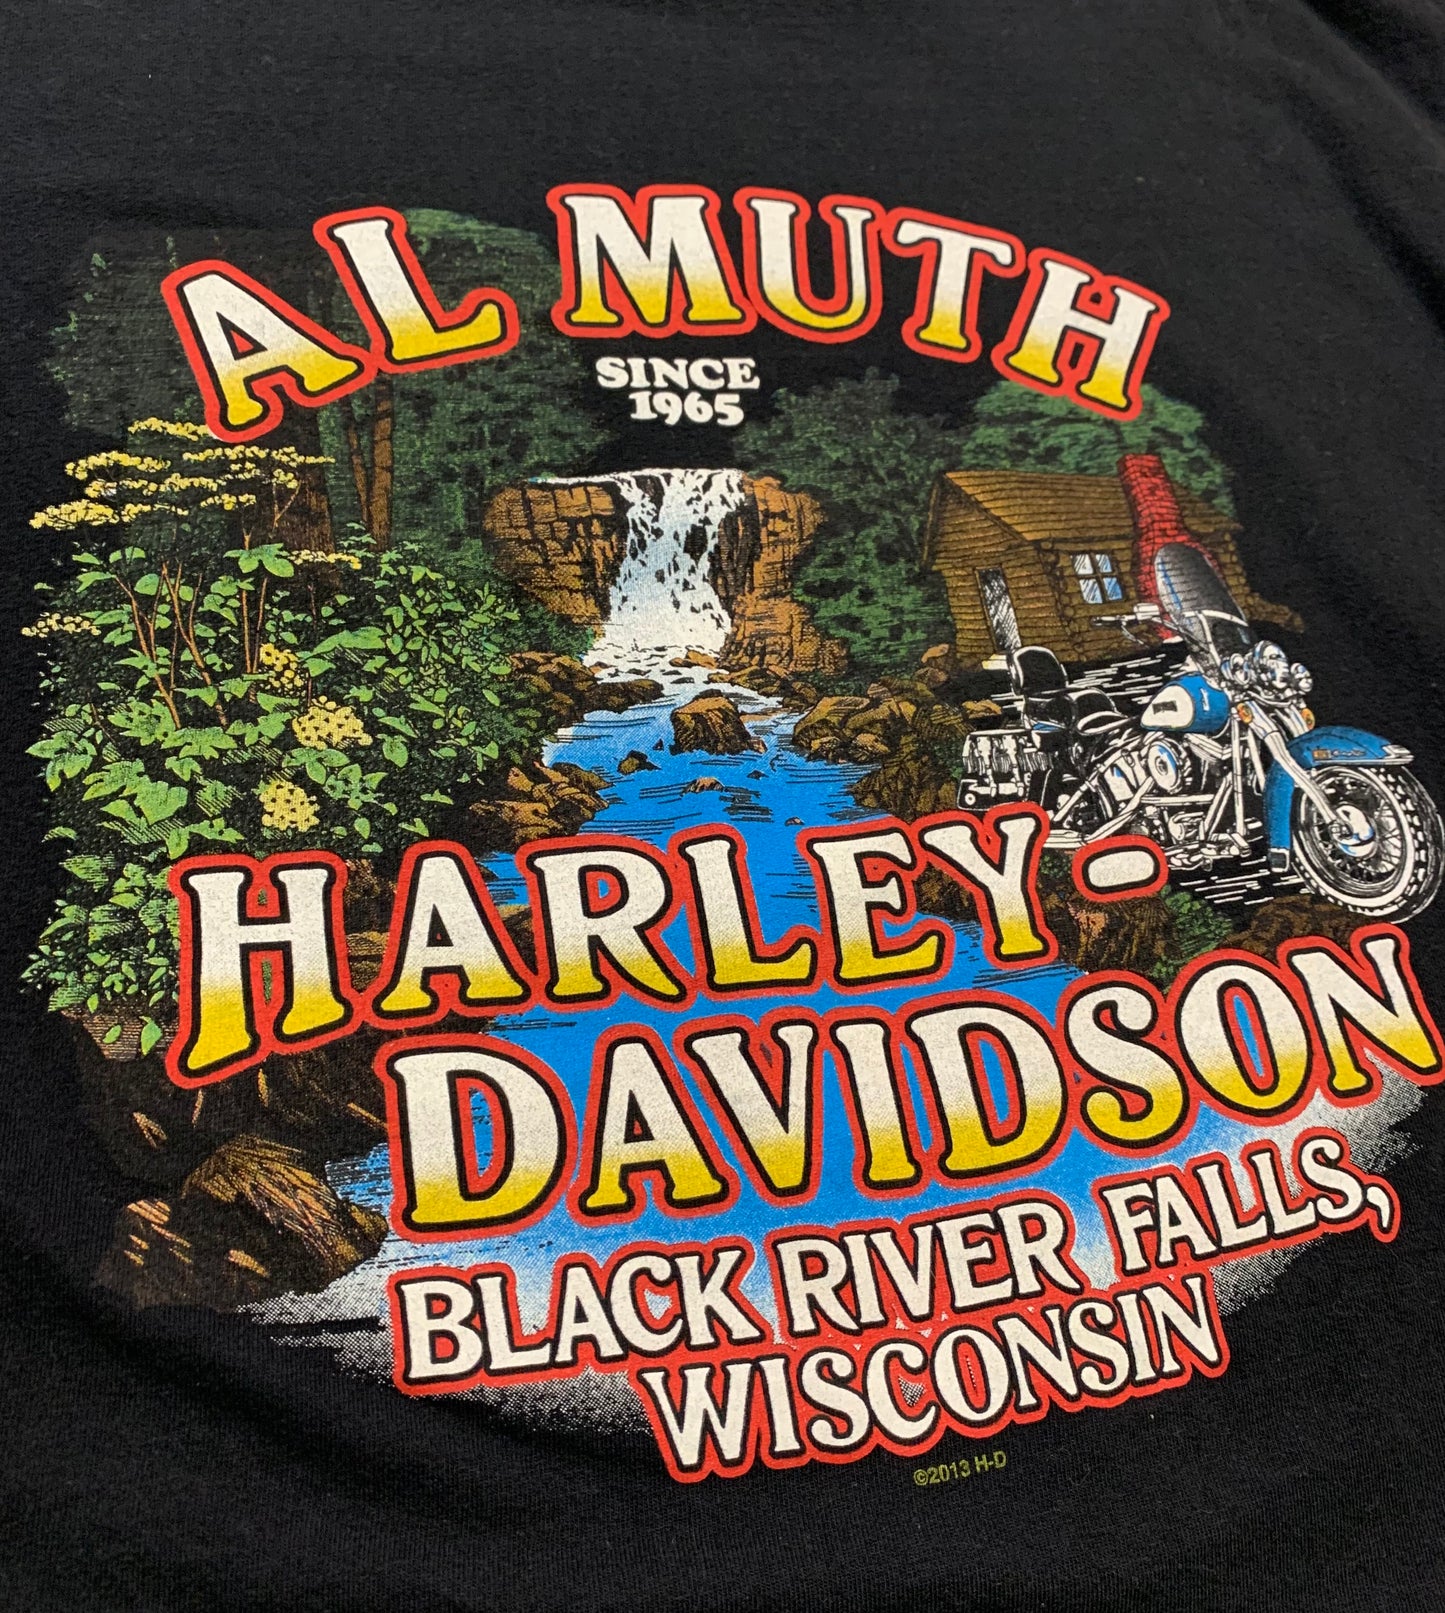 Harley Davidson "Al Muth" Black River Falls, Wisconsin T-Shirt